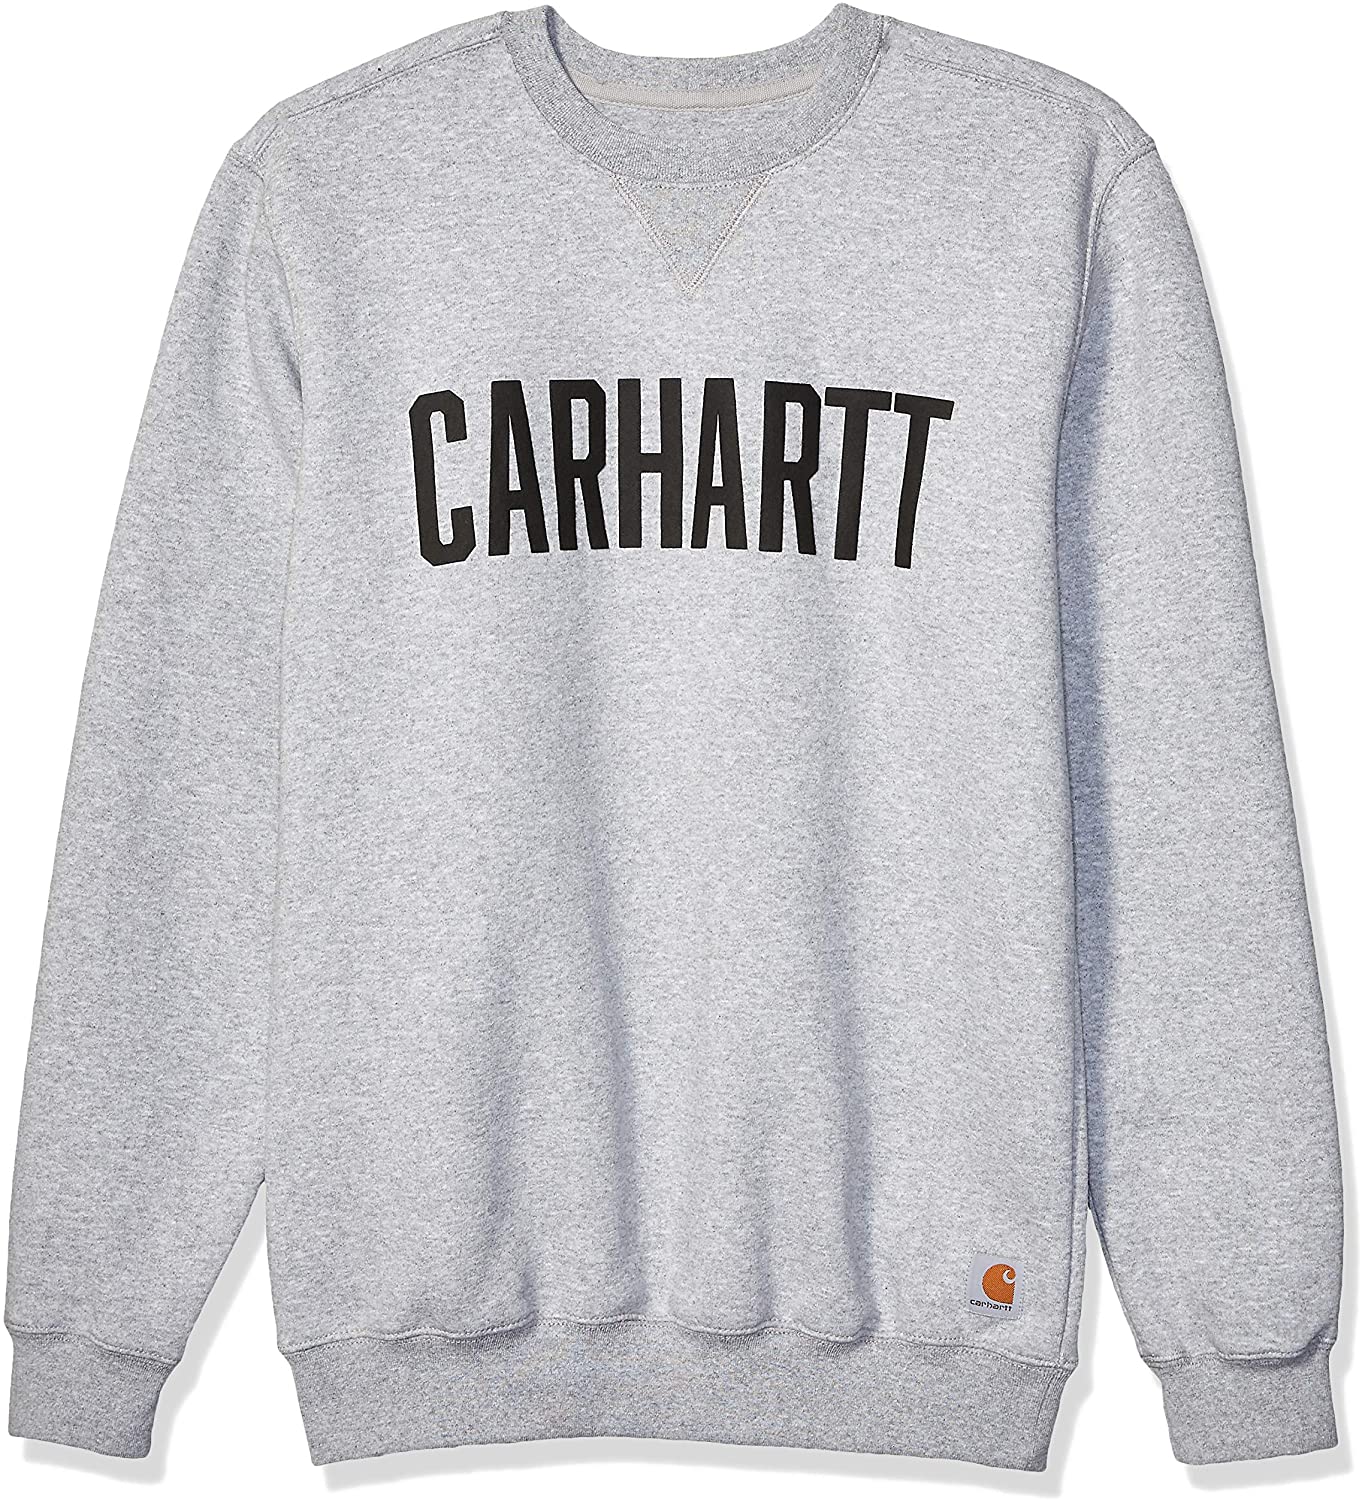 Carhartt Crewneck Pocket Sweatshirt Men's Carbon Heather